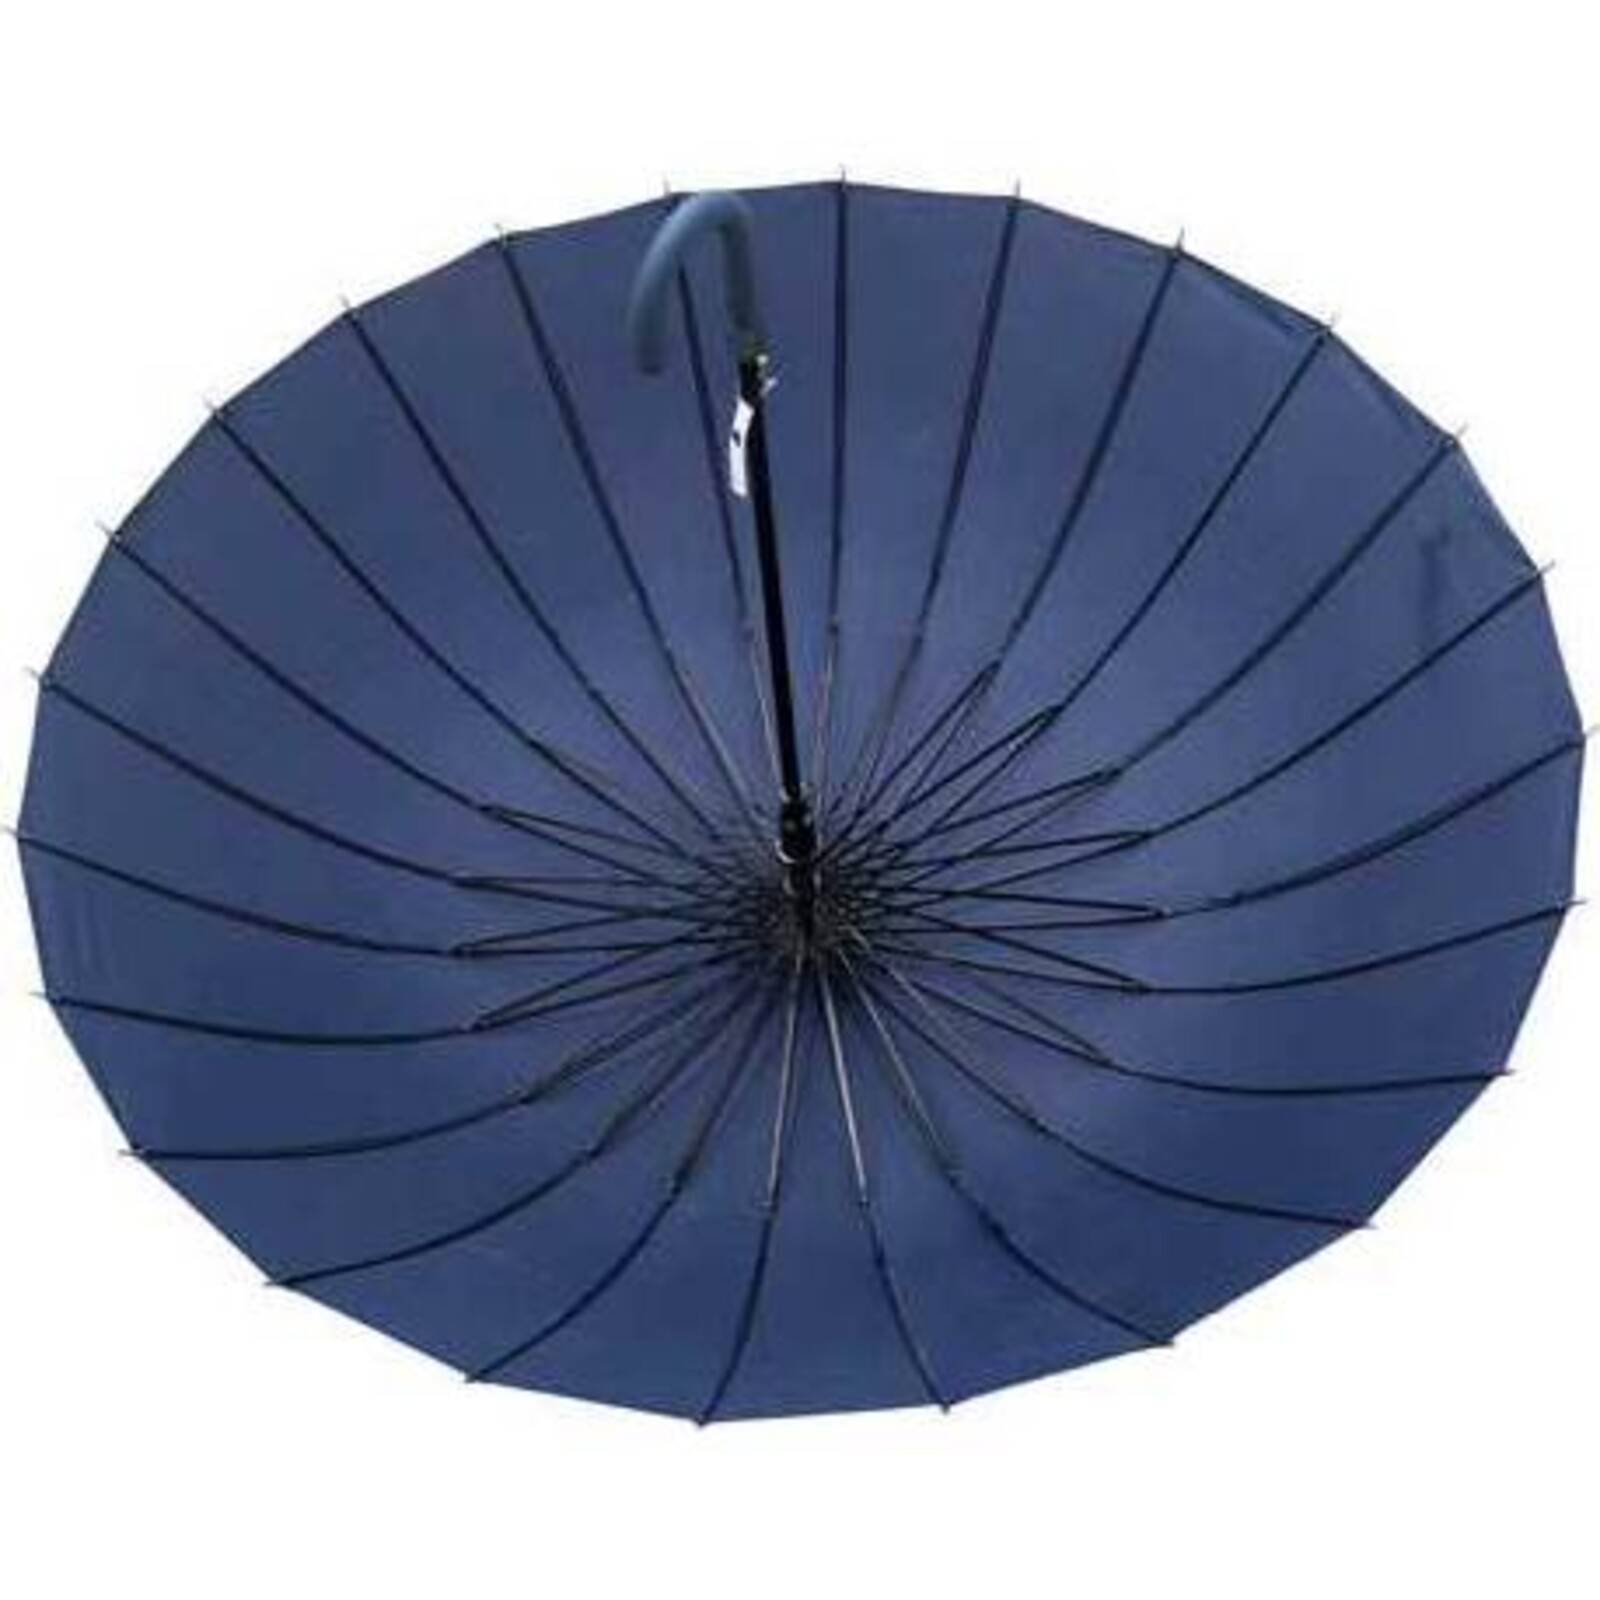 Umbrella Classic Navy